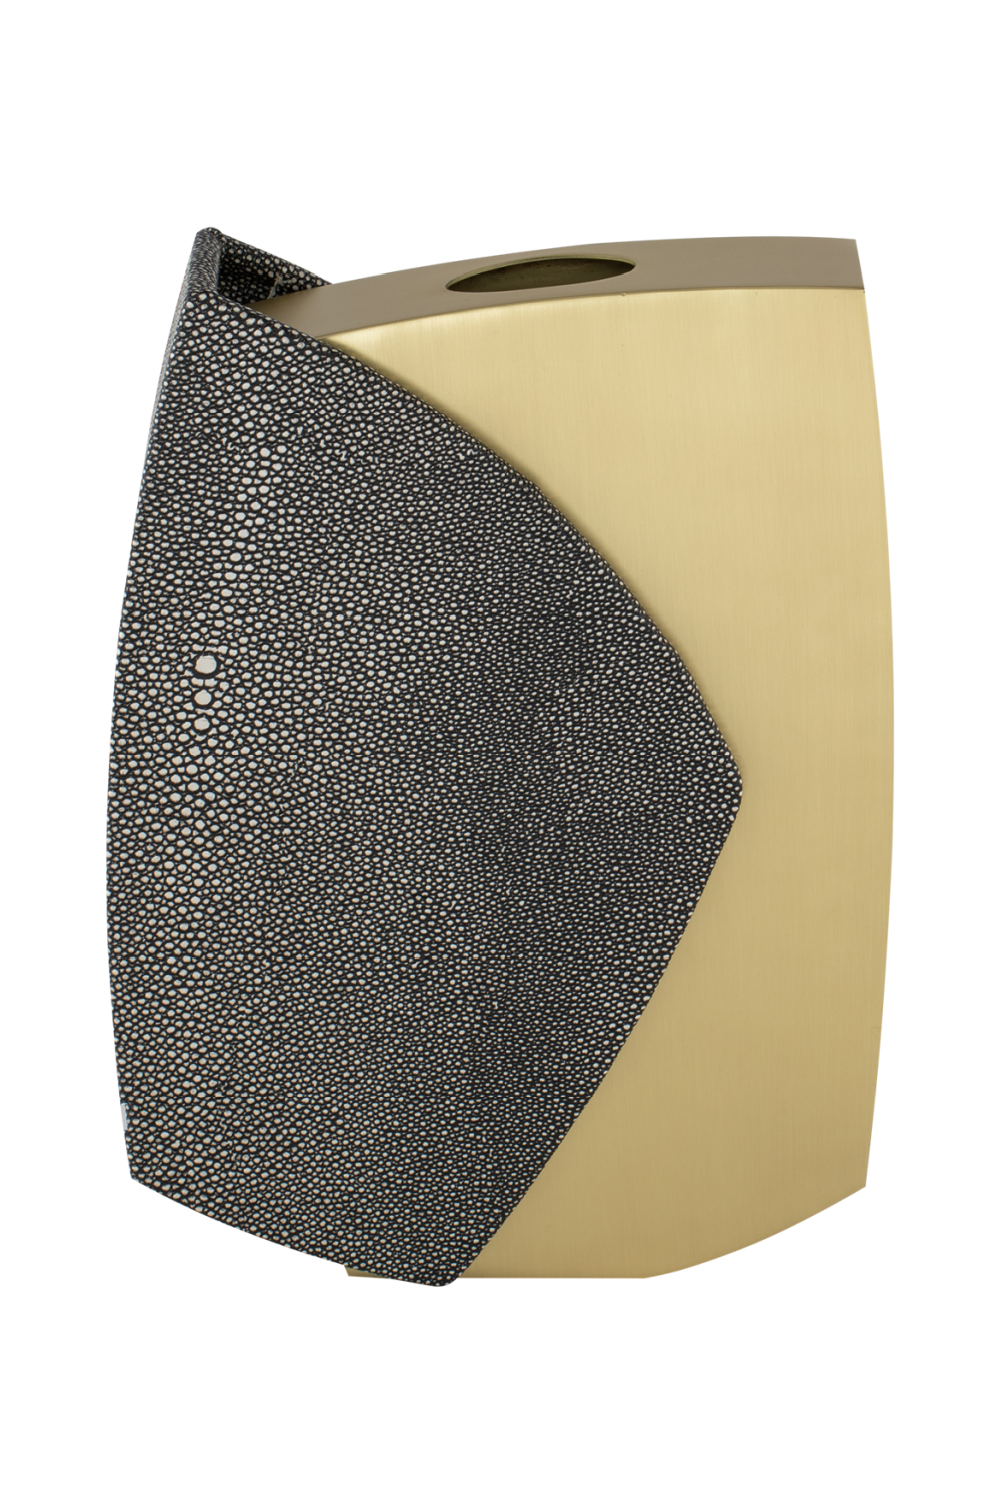 Shagreen Leather and Metal Vase | Liang & Eimil Raymond | Oroa.com